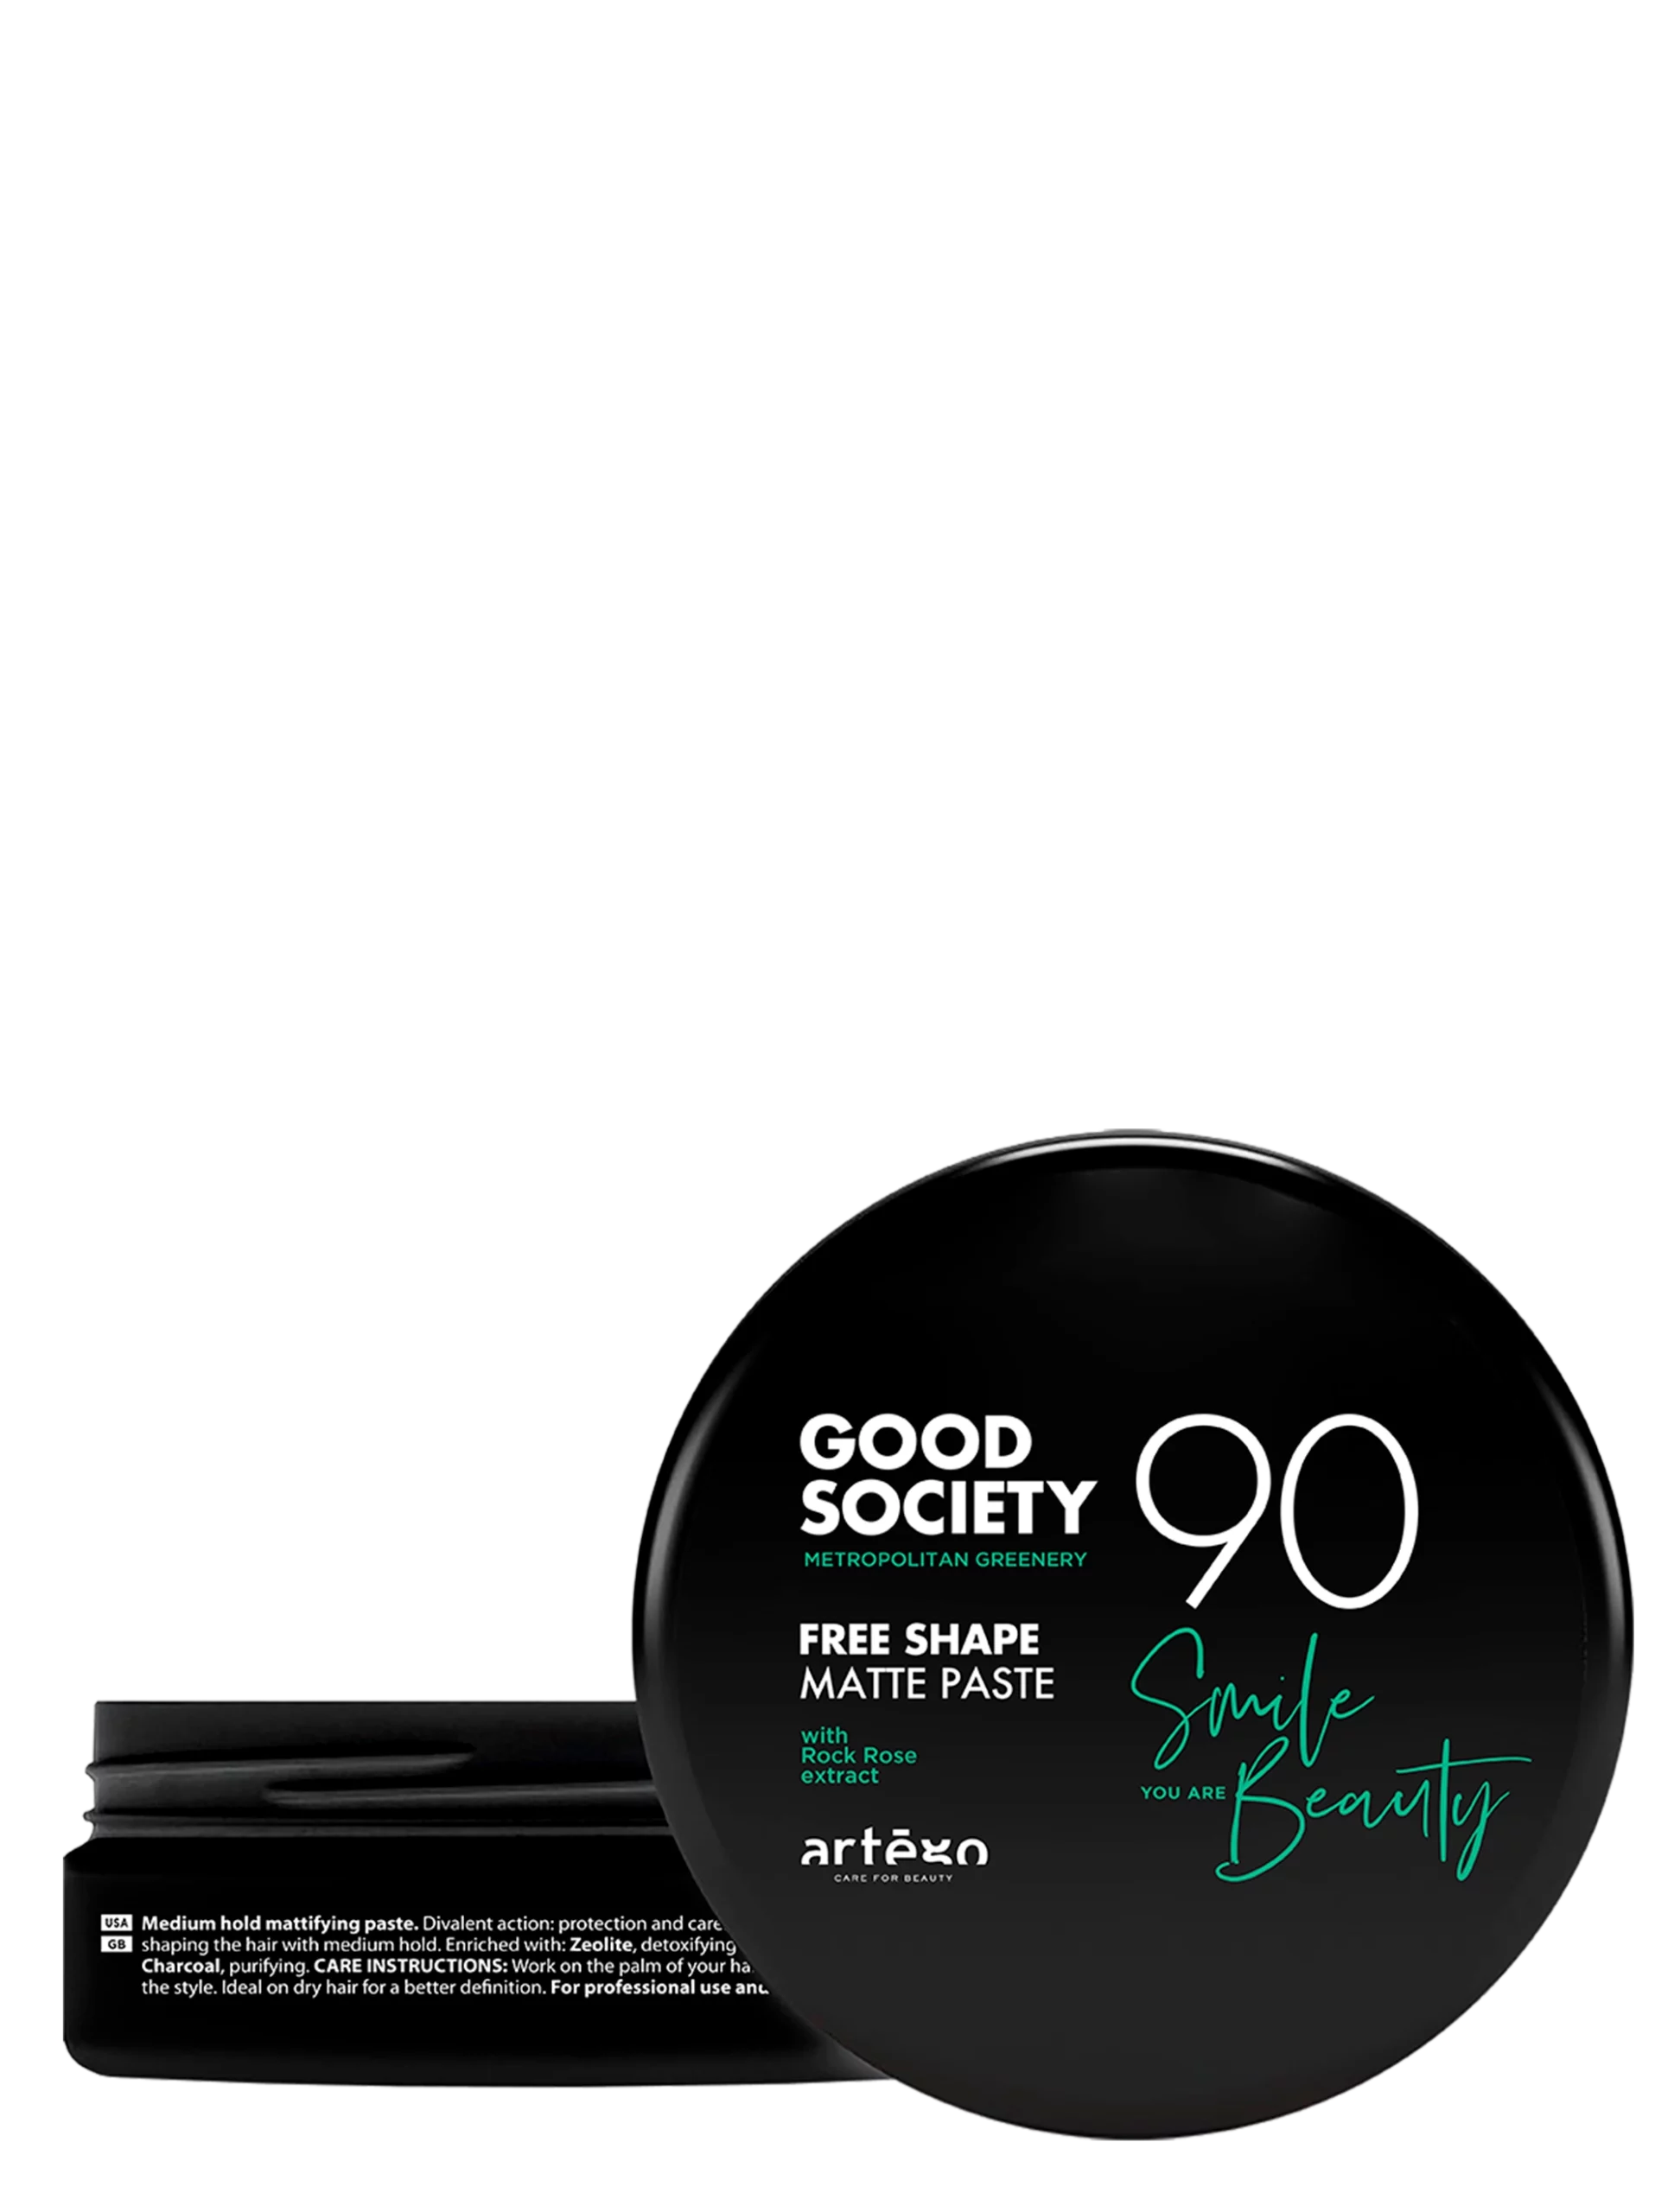 90-Good-Society-Matte-Paste